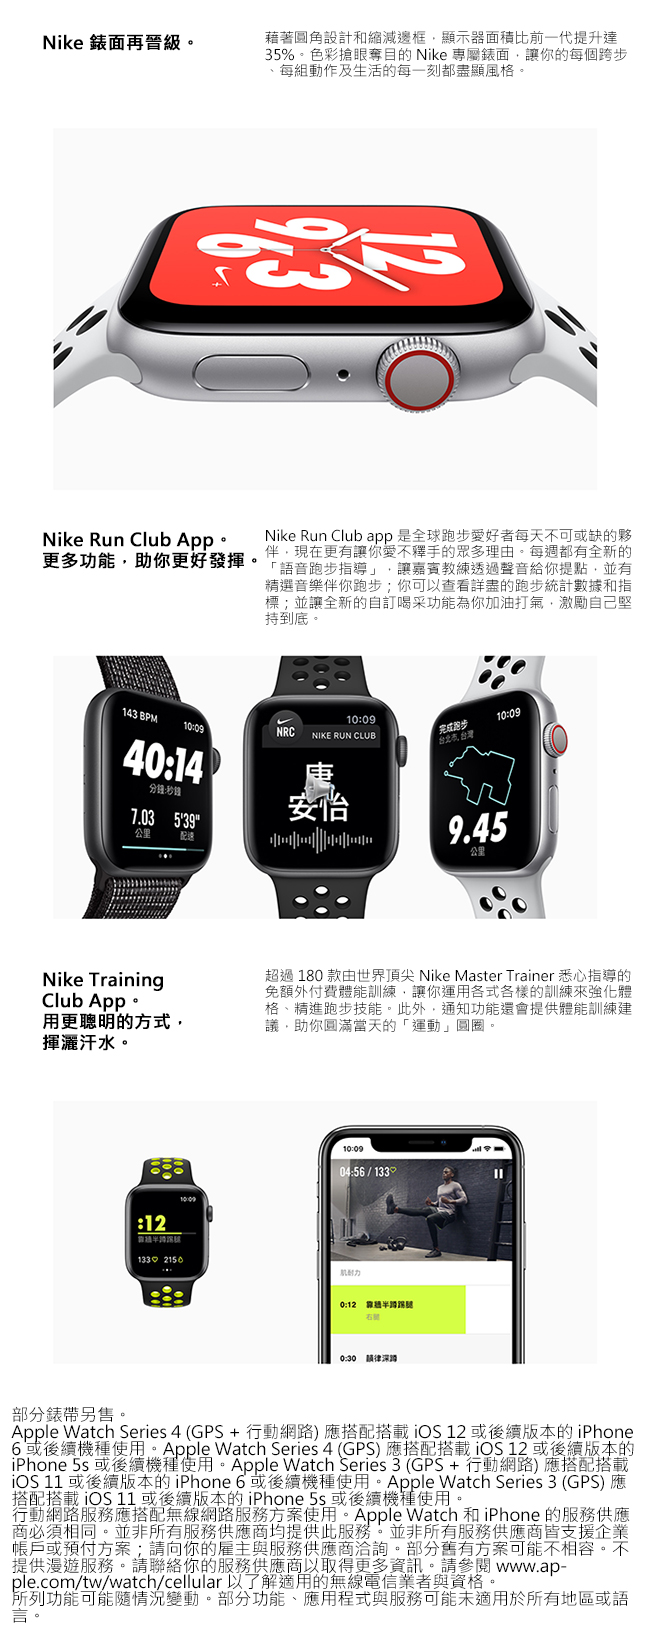 Apple Watch Nike+ S4(GPS+網路)40mm 太空灰色鋁金屬+黑色錶帶